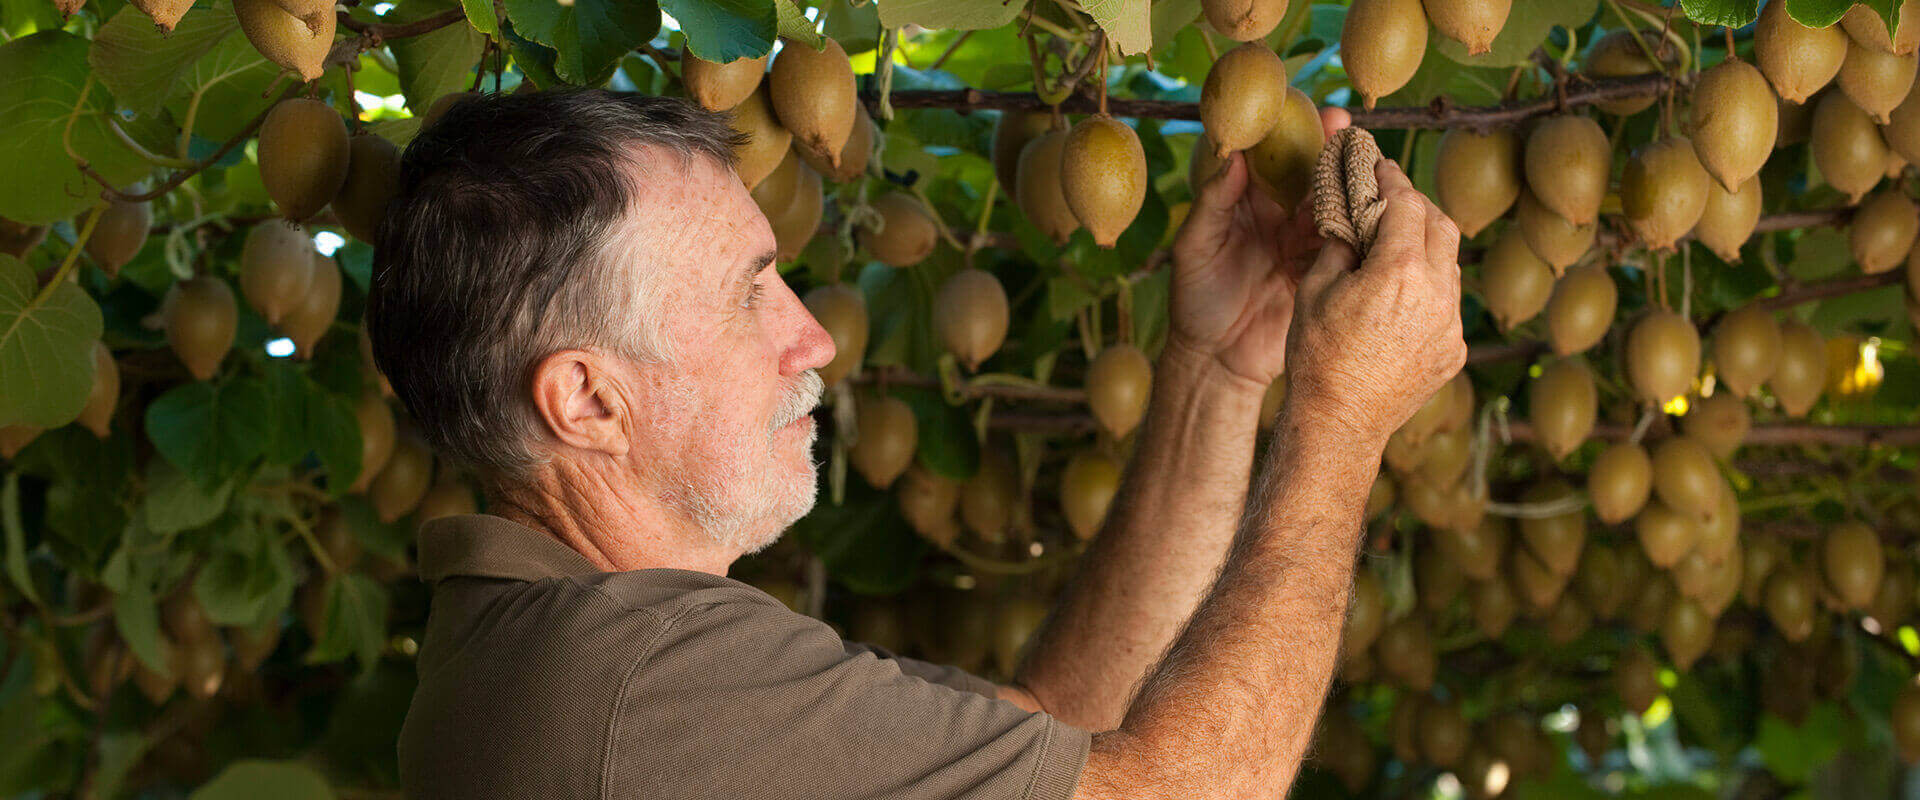 kiwifruit-season-masthead.jpg